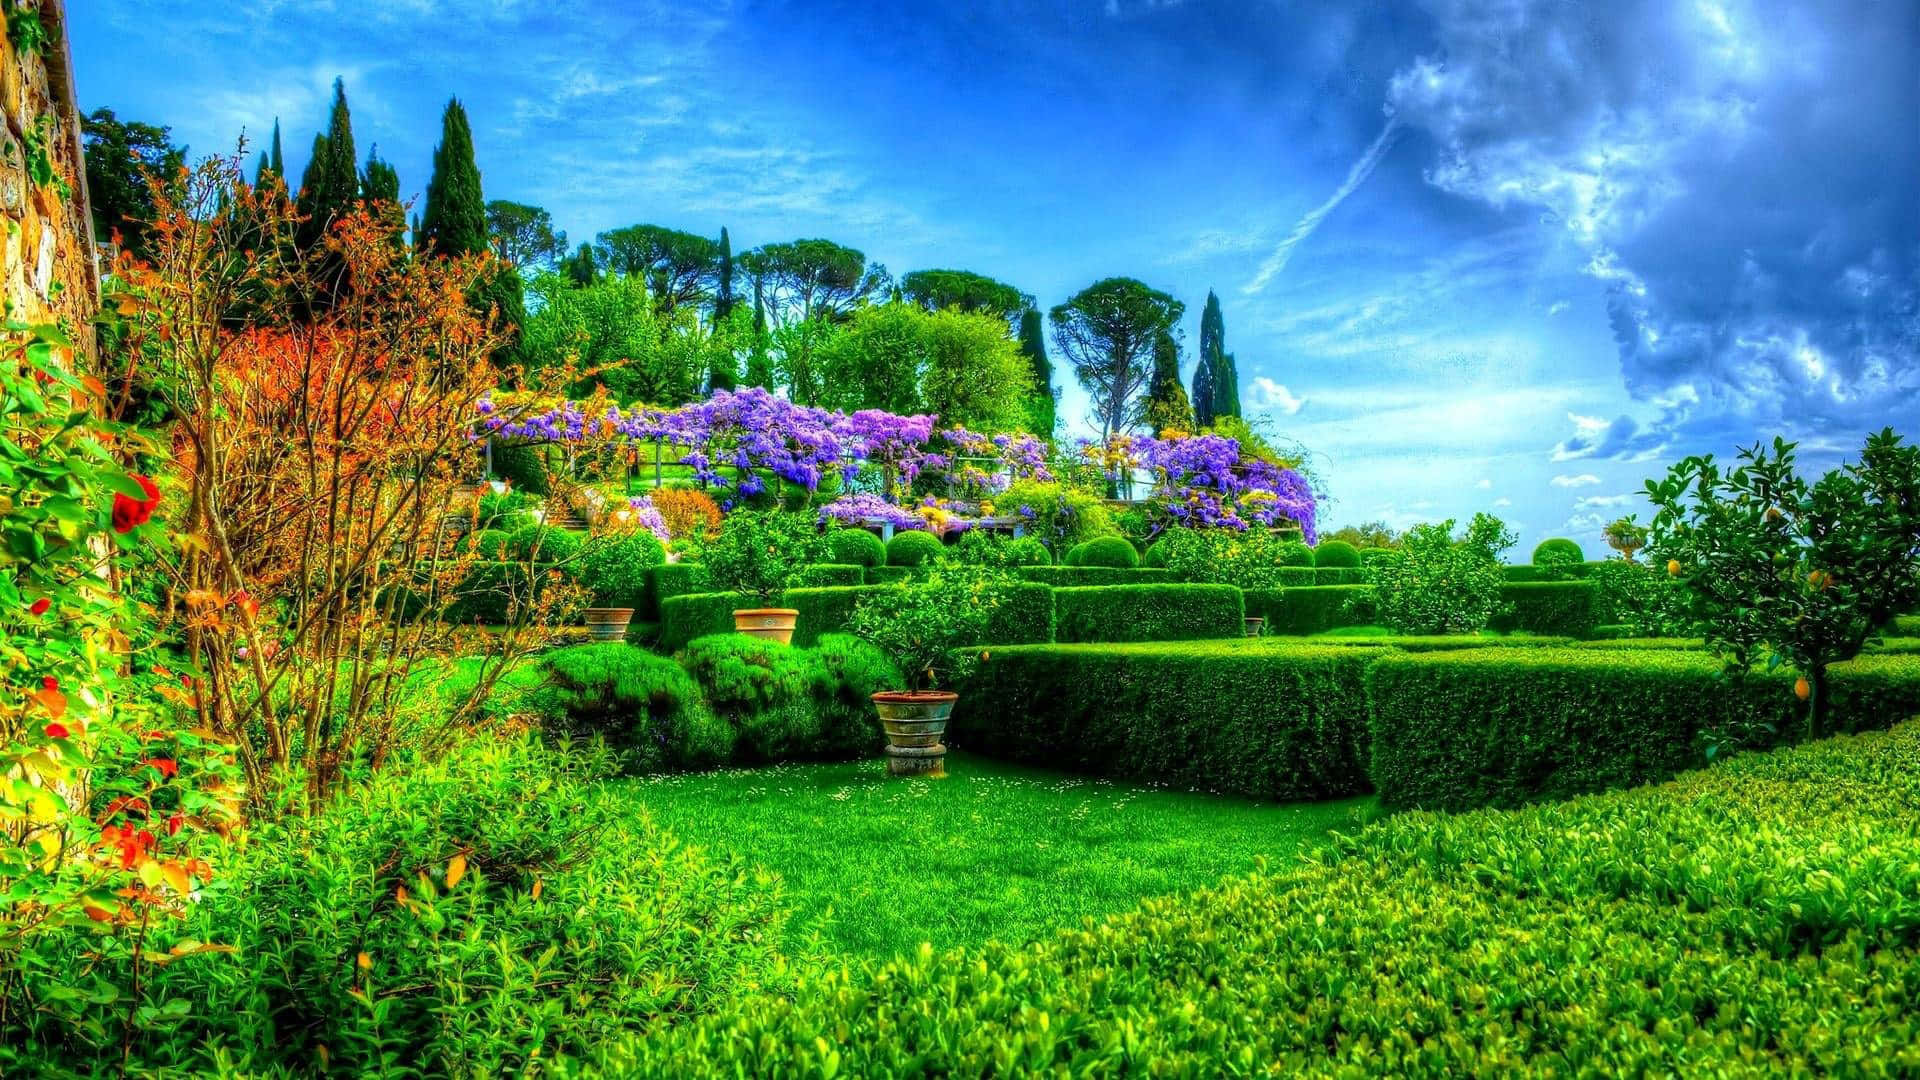 An idyllic garden with lush, green foliage